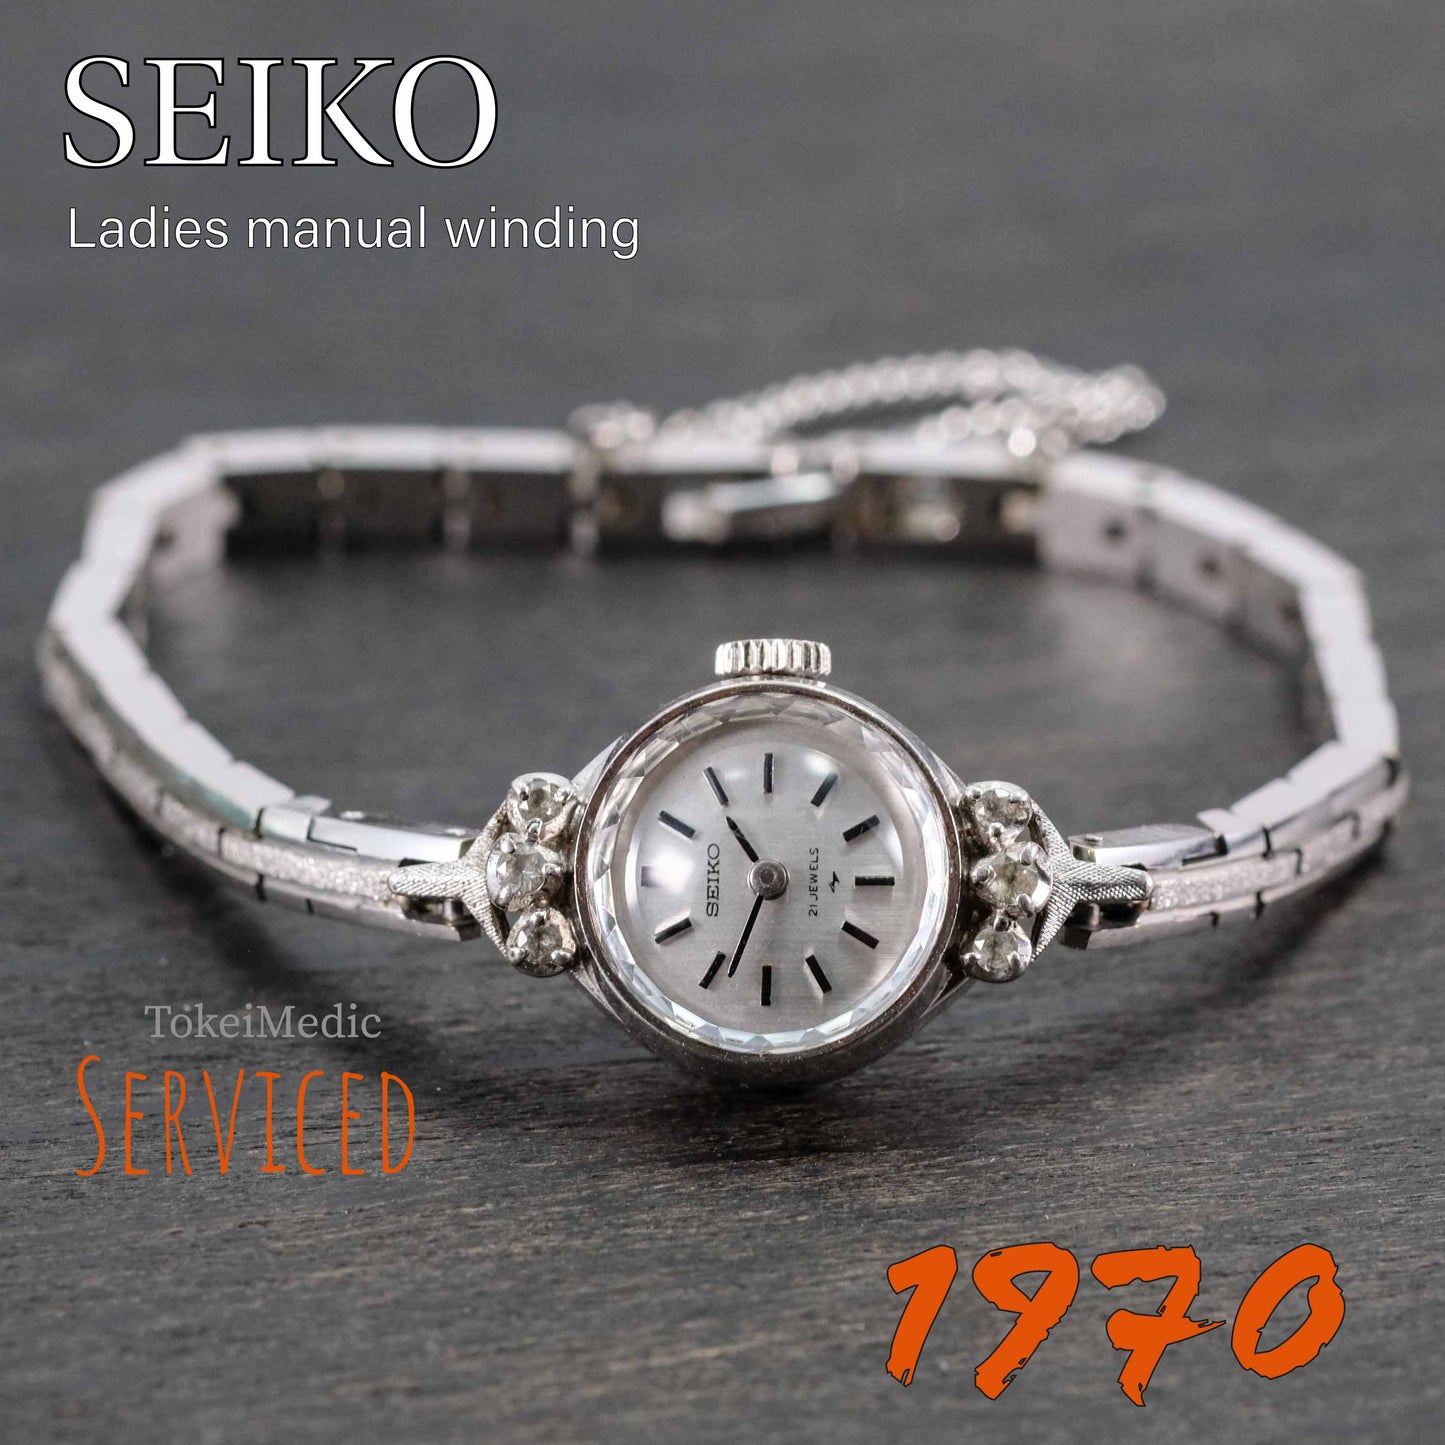 1970 Seiko 11-0430 manual winding ladies